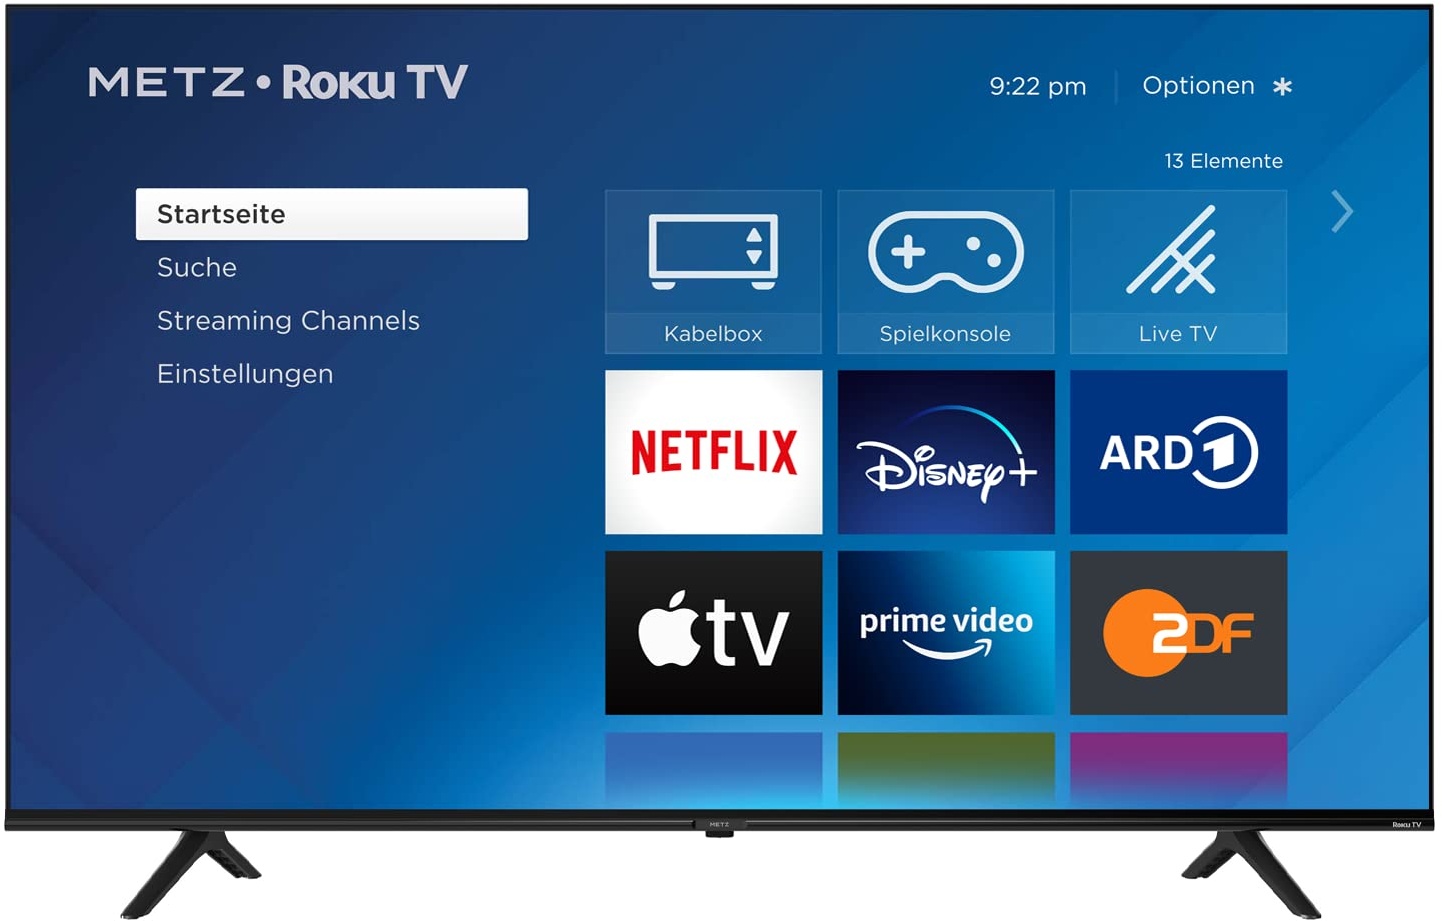 METZ Blue Roku TV, 4K UHD Smart TV, 55 Zoll, 139 cm, Fernseher mit Triple Tuner, mit WLAN, LAN, HDMI, USB, HDTV